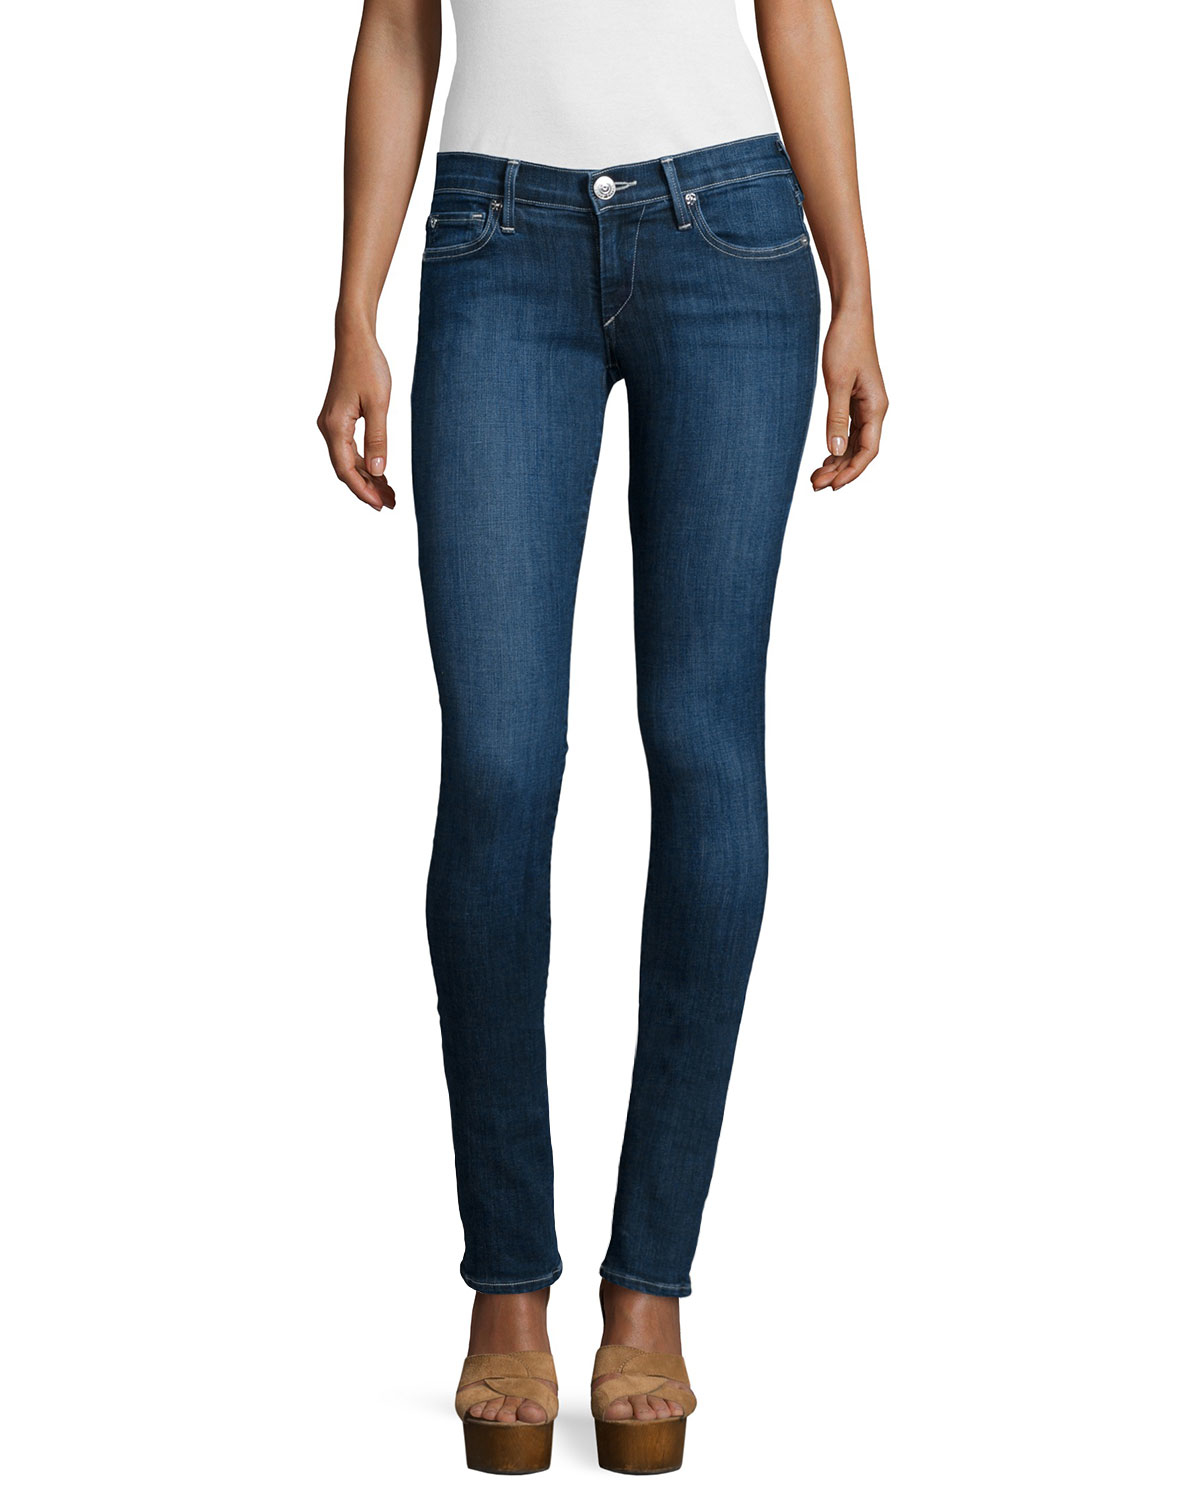 H&m skinny high waist jeans into low waist pants